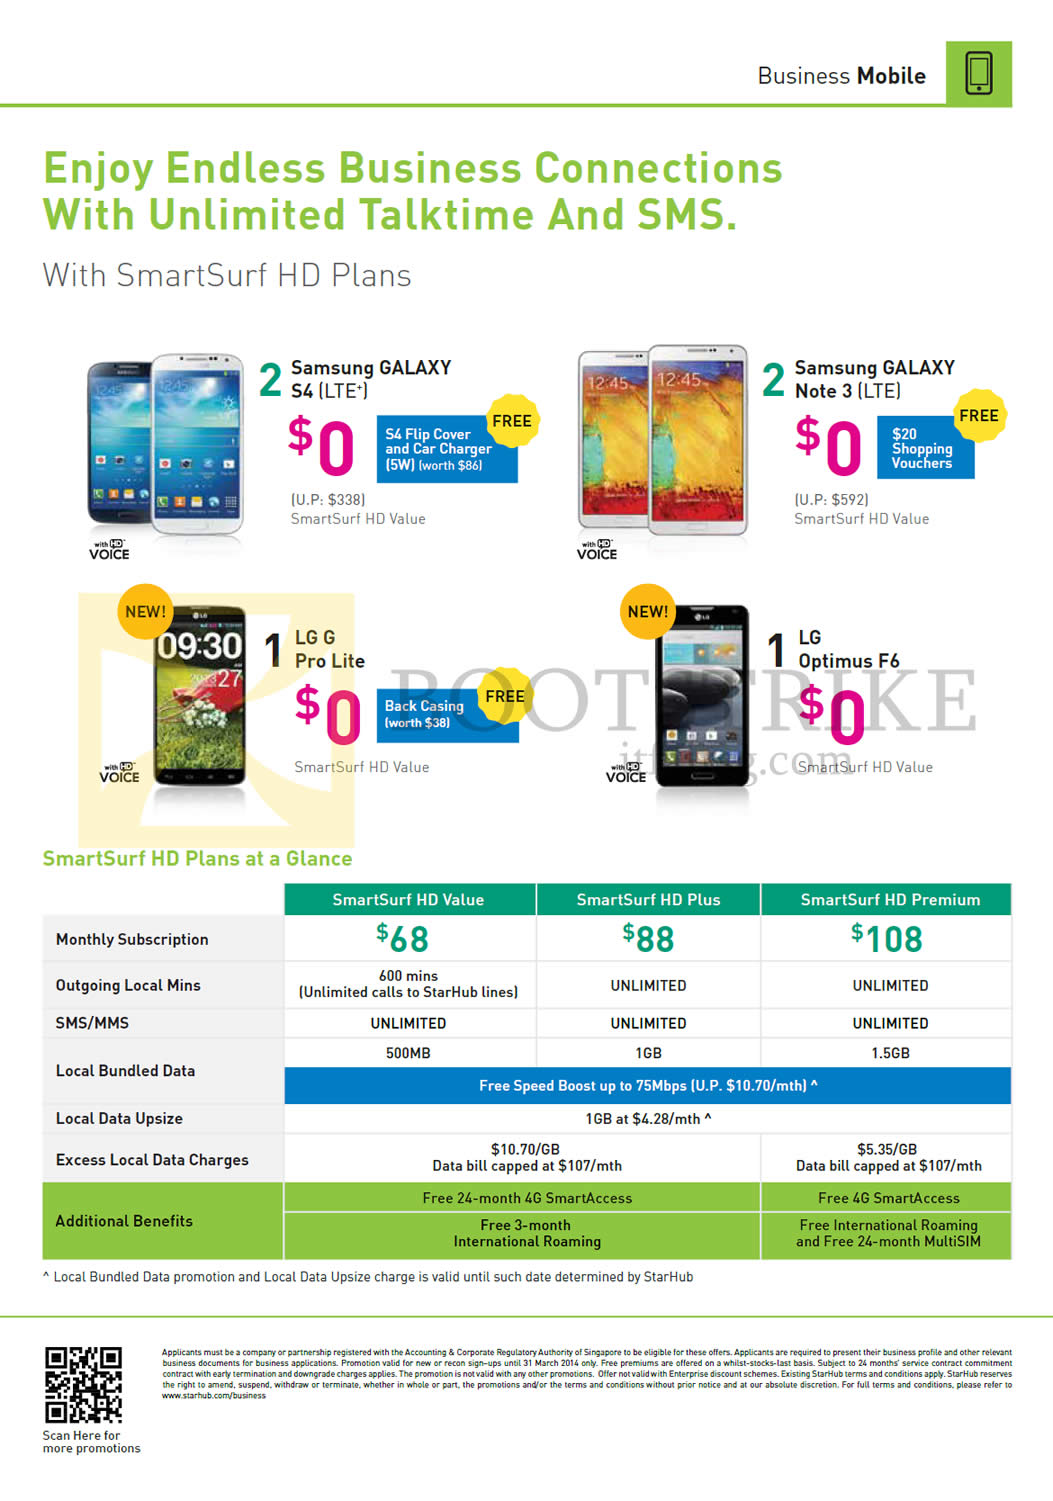 IT SHOW 2014 price list image brochure of StarHub Business Samsung Galaxy S4, Note 3, LG G Pro Lite, LG Optimus F6